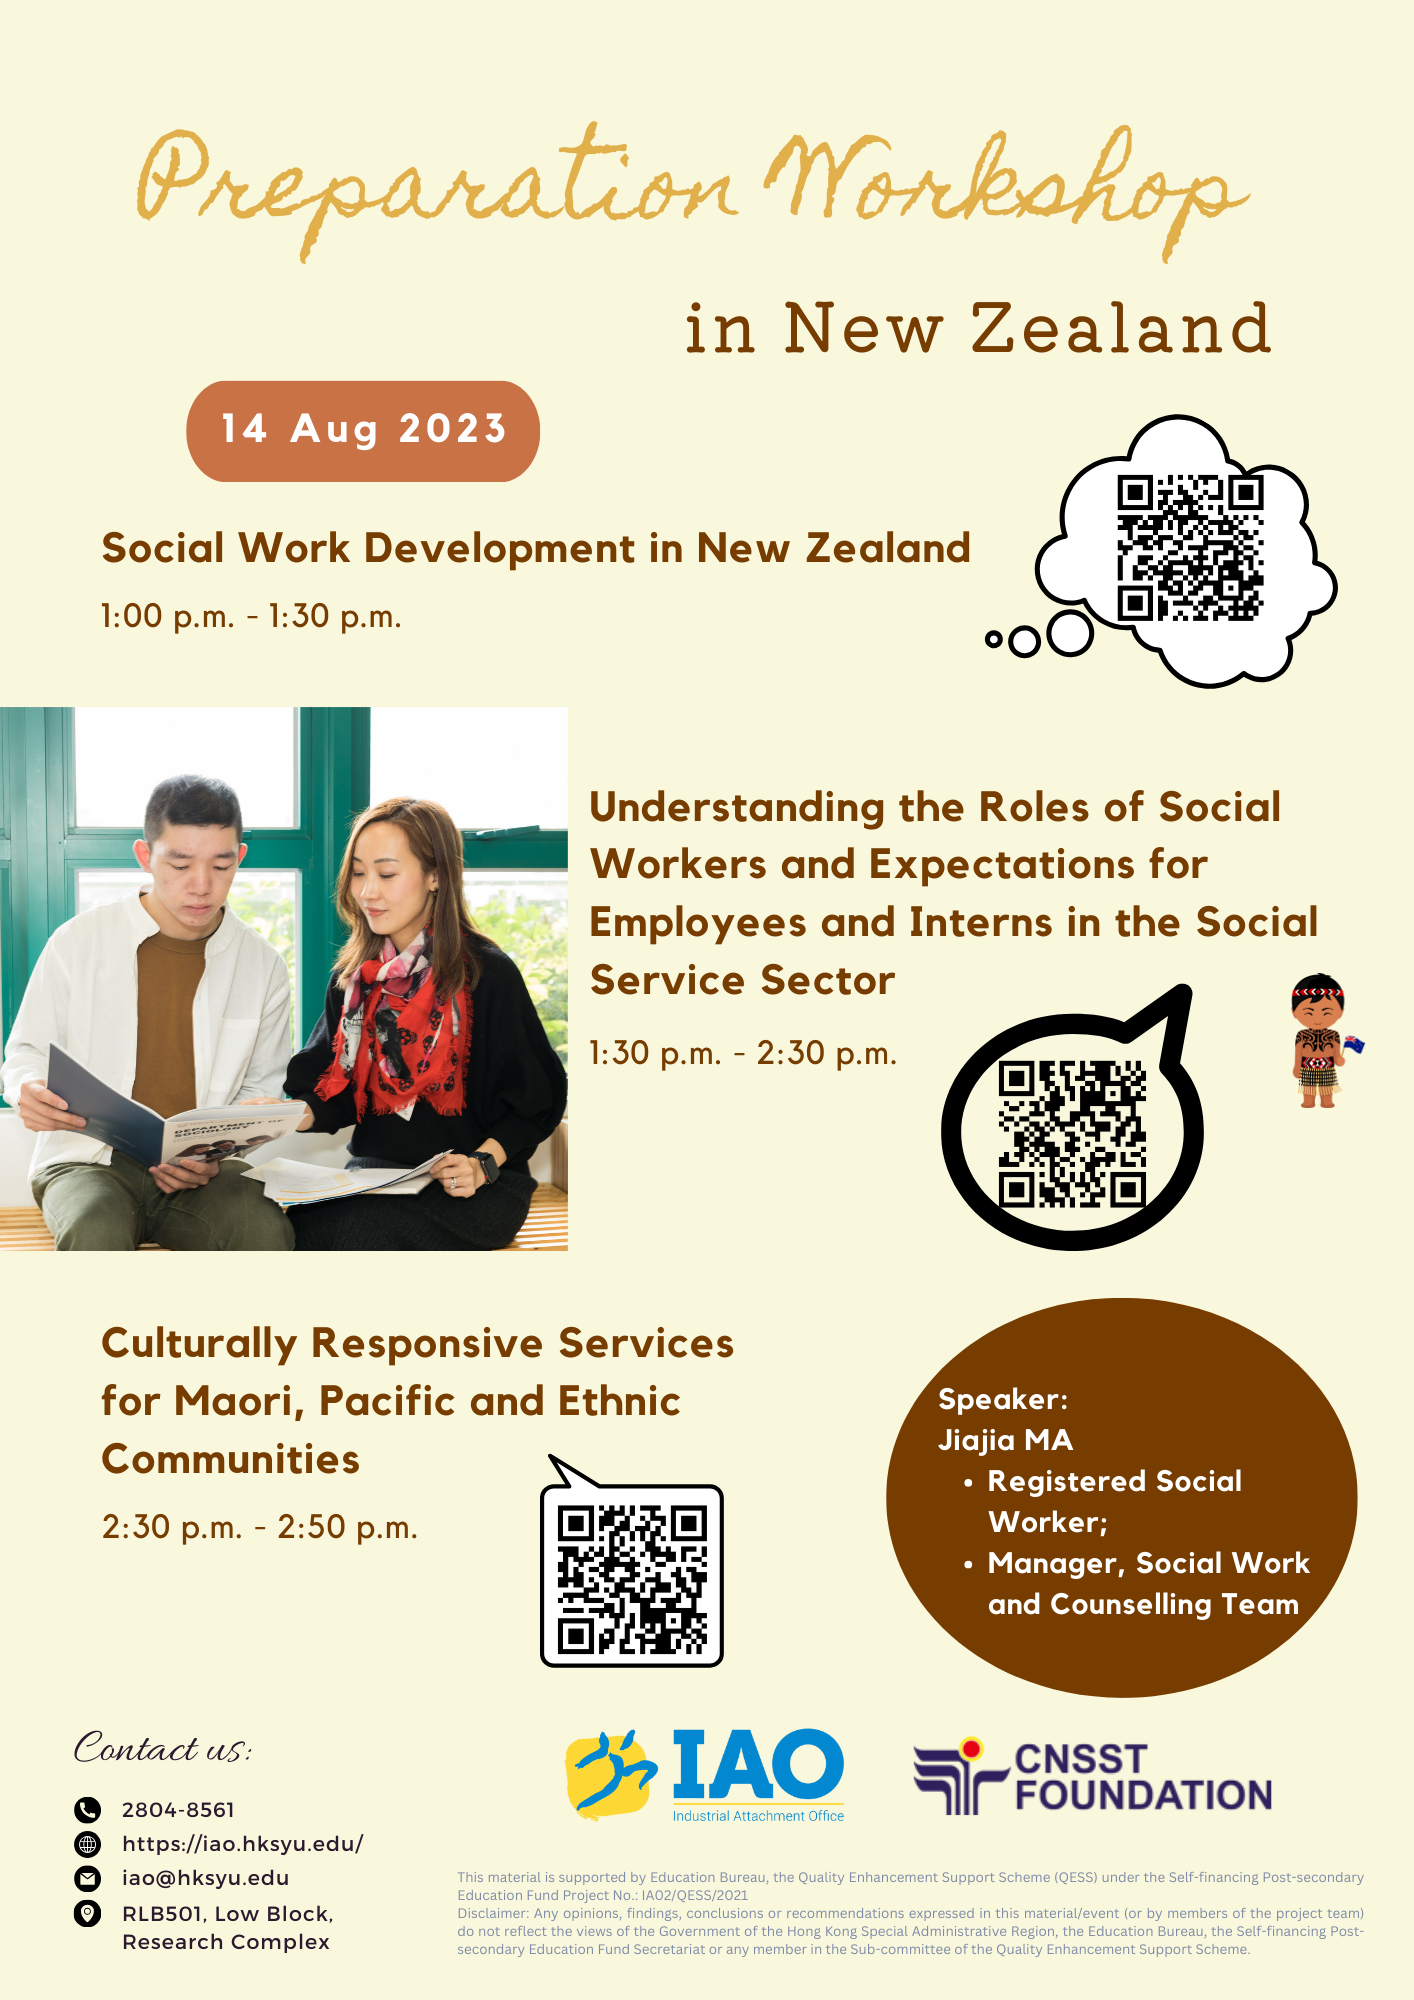 Preparation Workshop in New Zealand